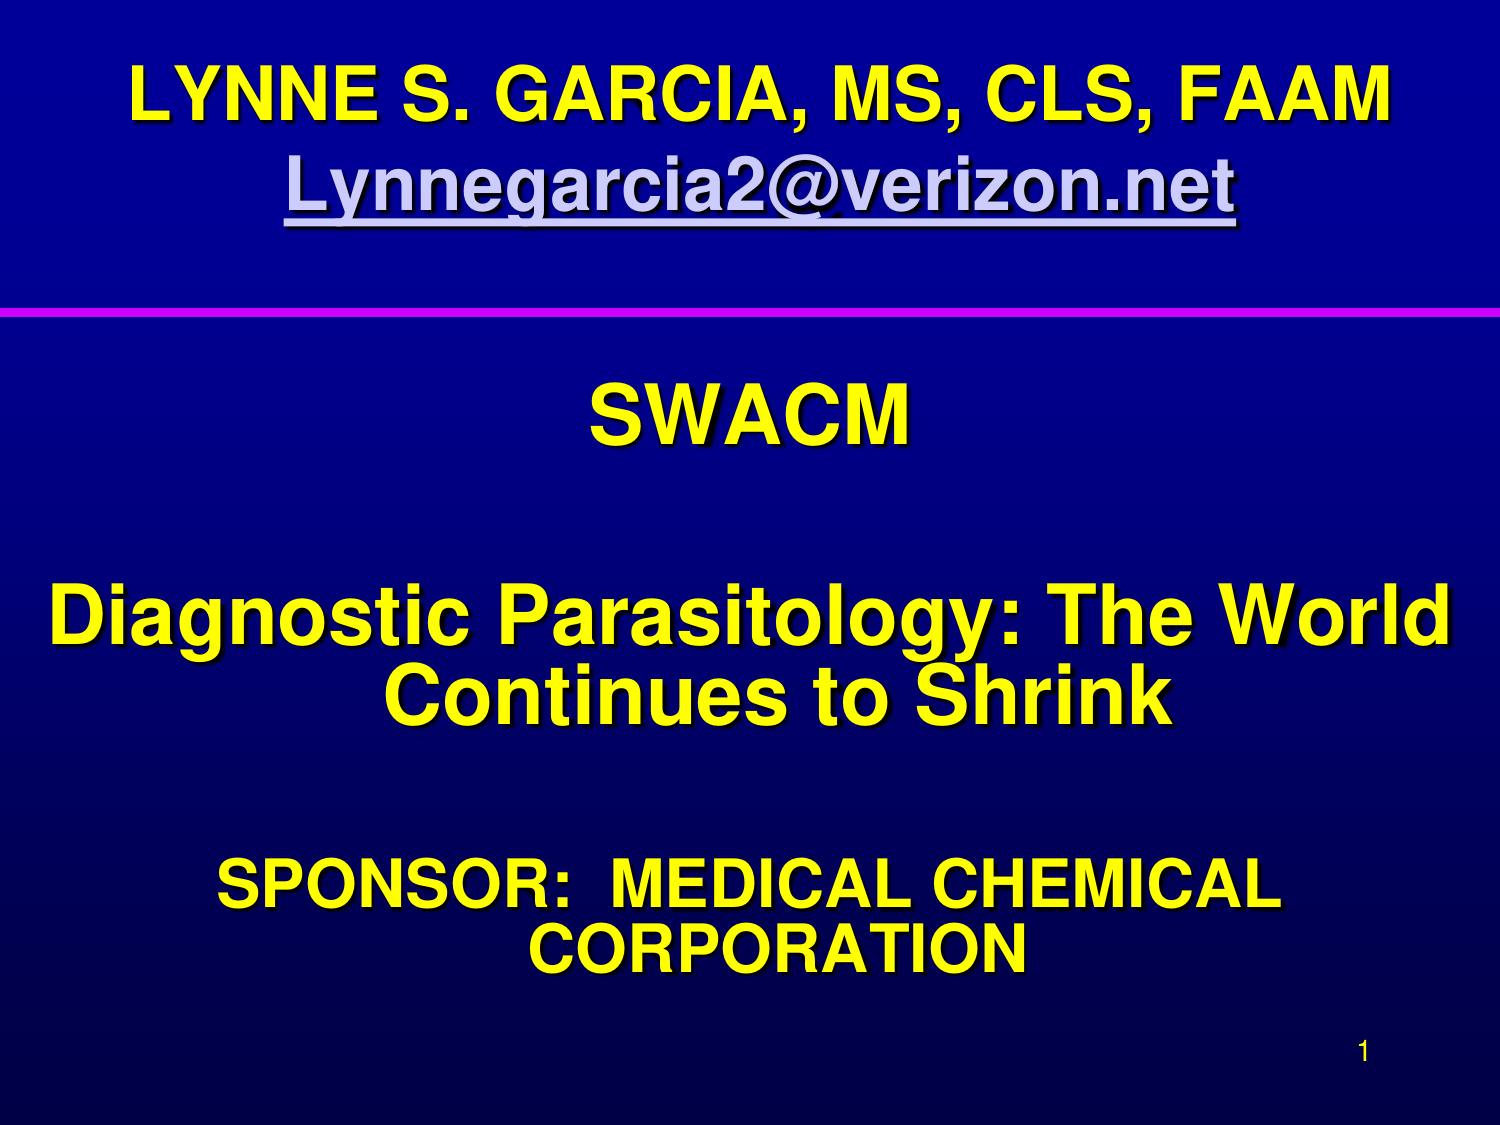 CONTRACTS CPT CODES  Lynne Garcia  UCLA Medical Center Workshop W12 (Sat, 5/29)